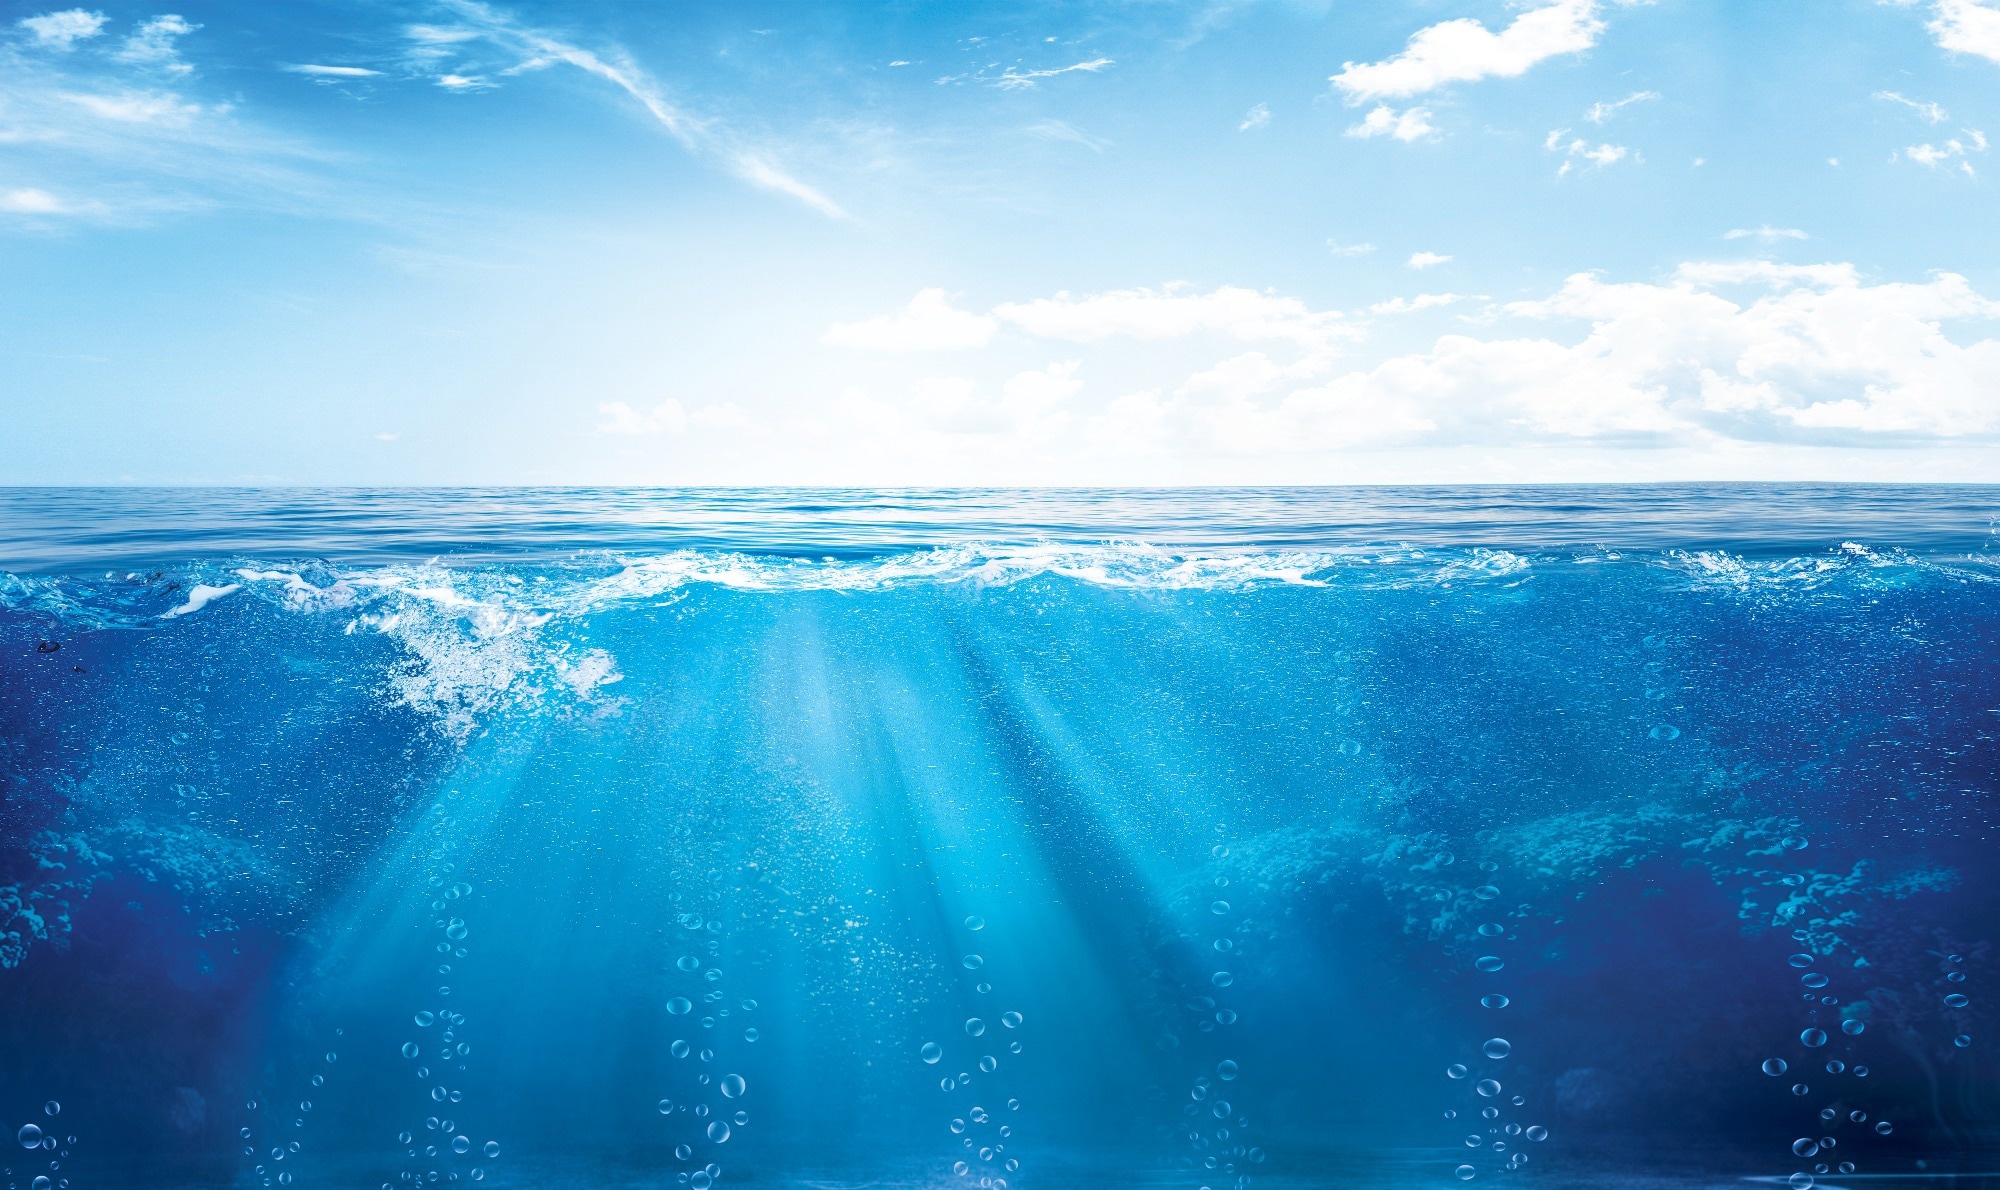 Future Climate Change May Impact Marine Ecosystems